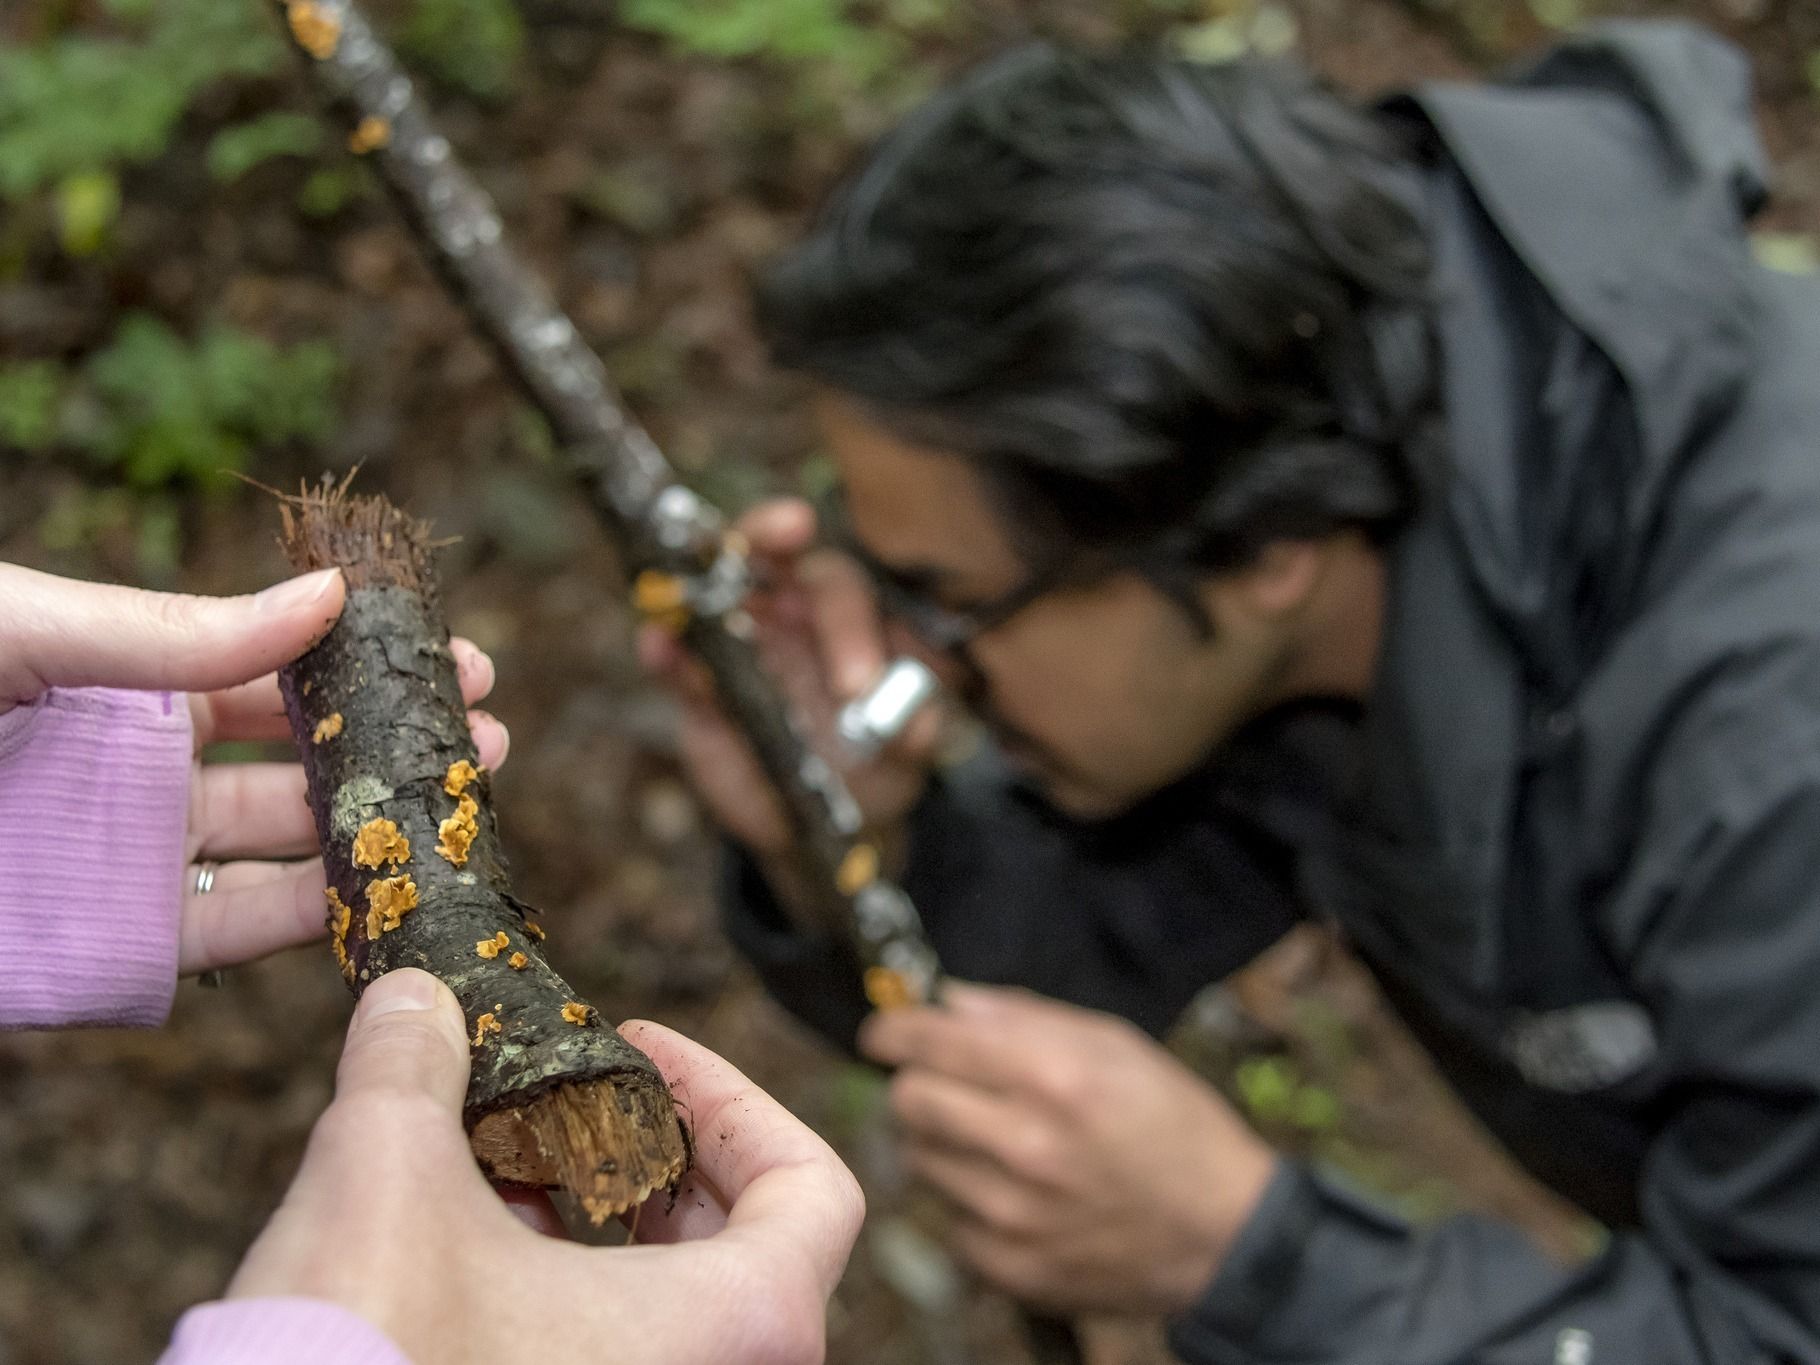 Researchers examining fungi on fallen sticks